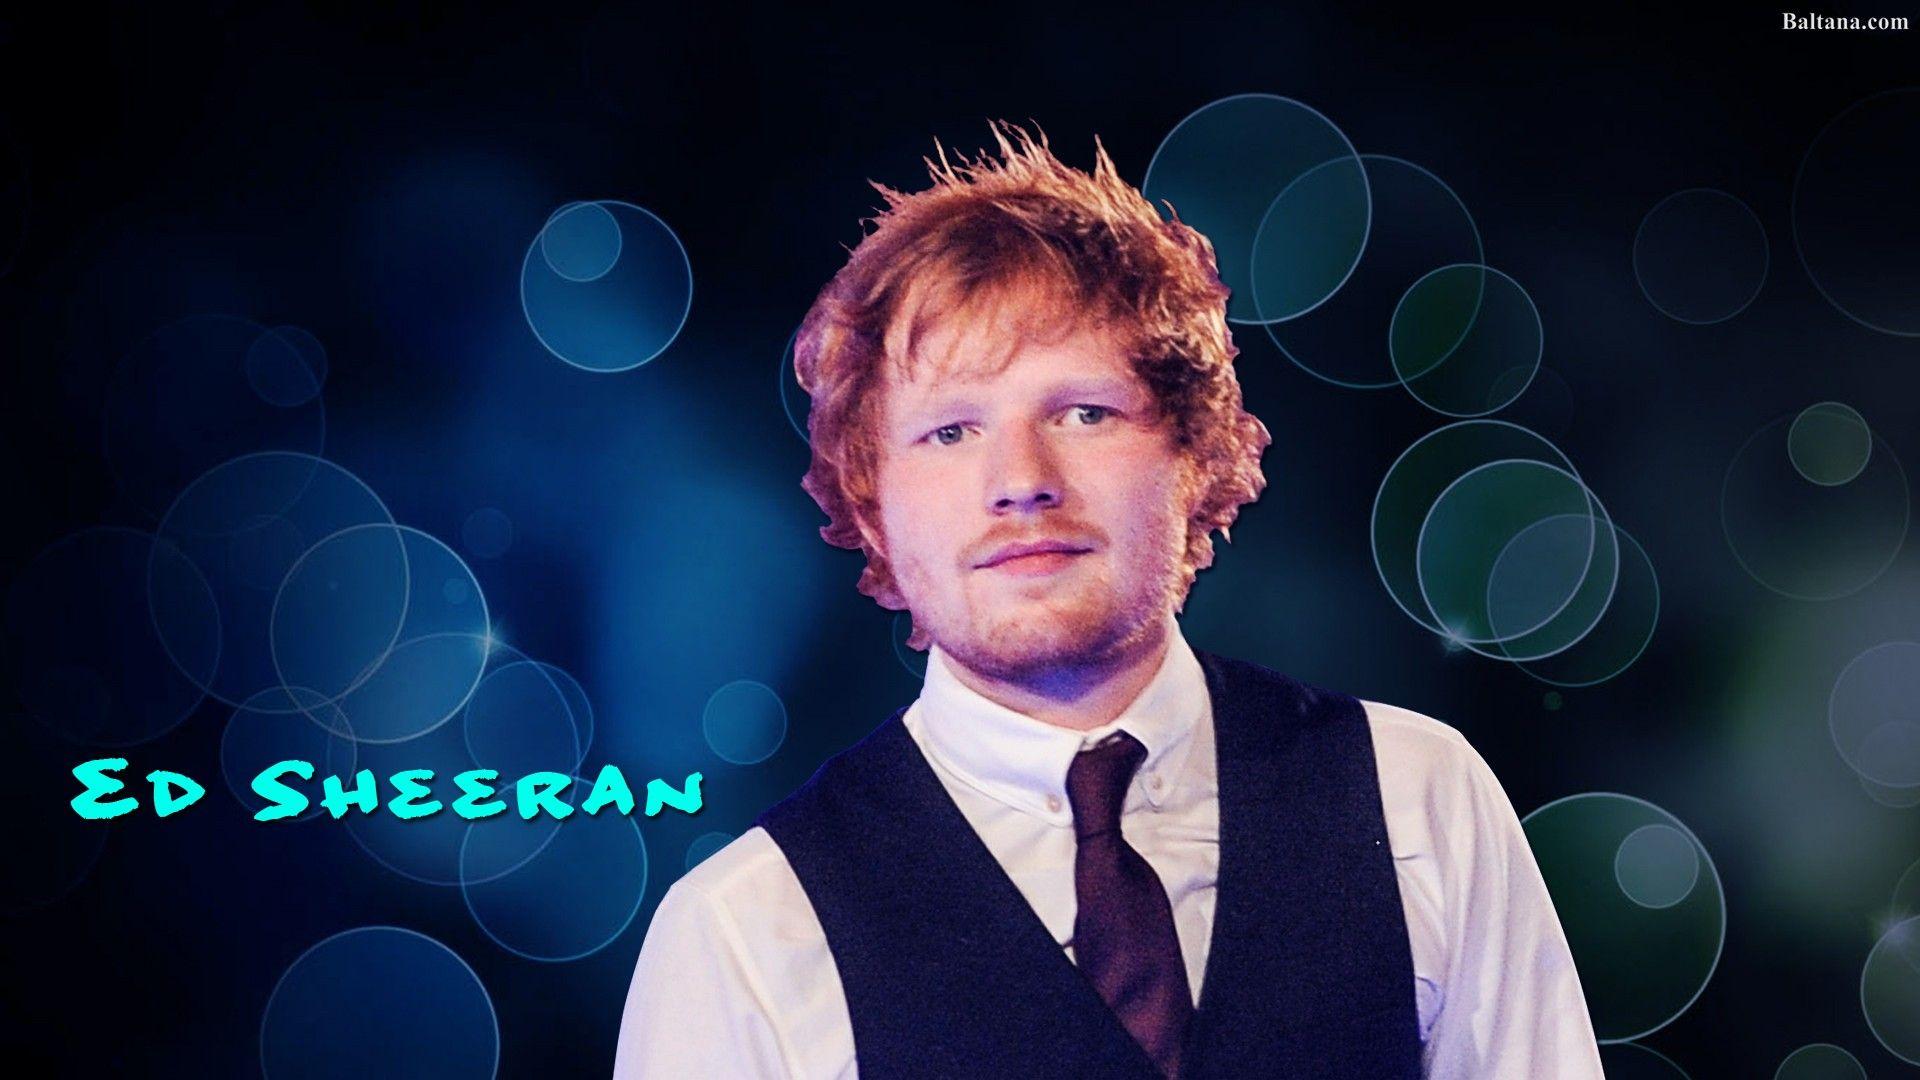 Ed Sheeran HD Desktop Wallpaper 30344